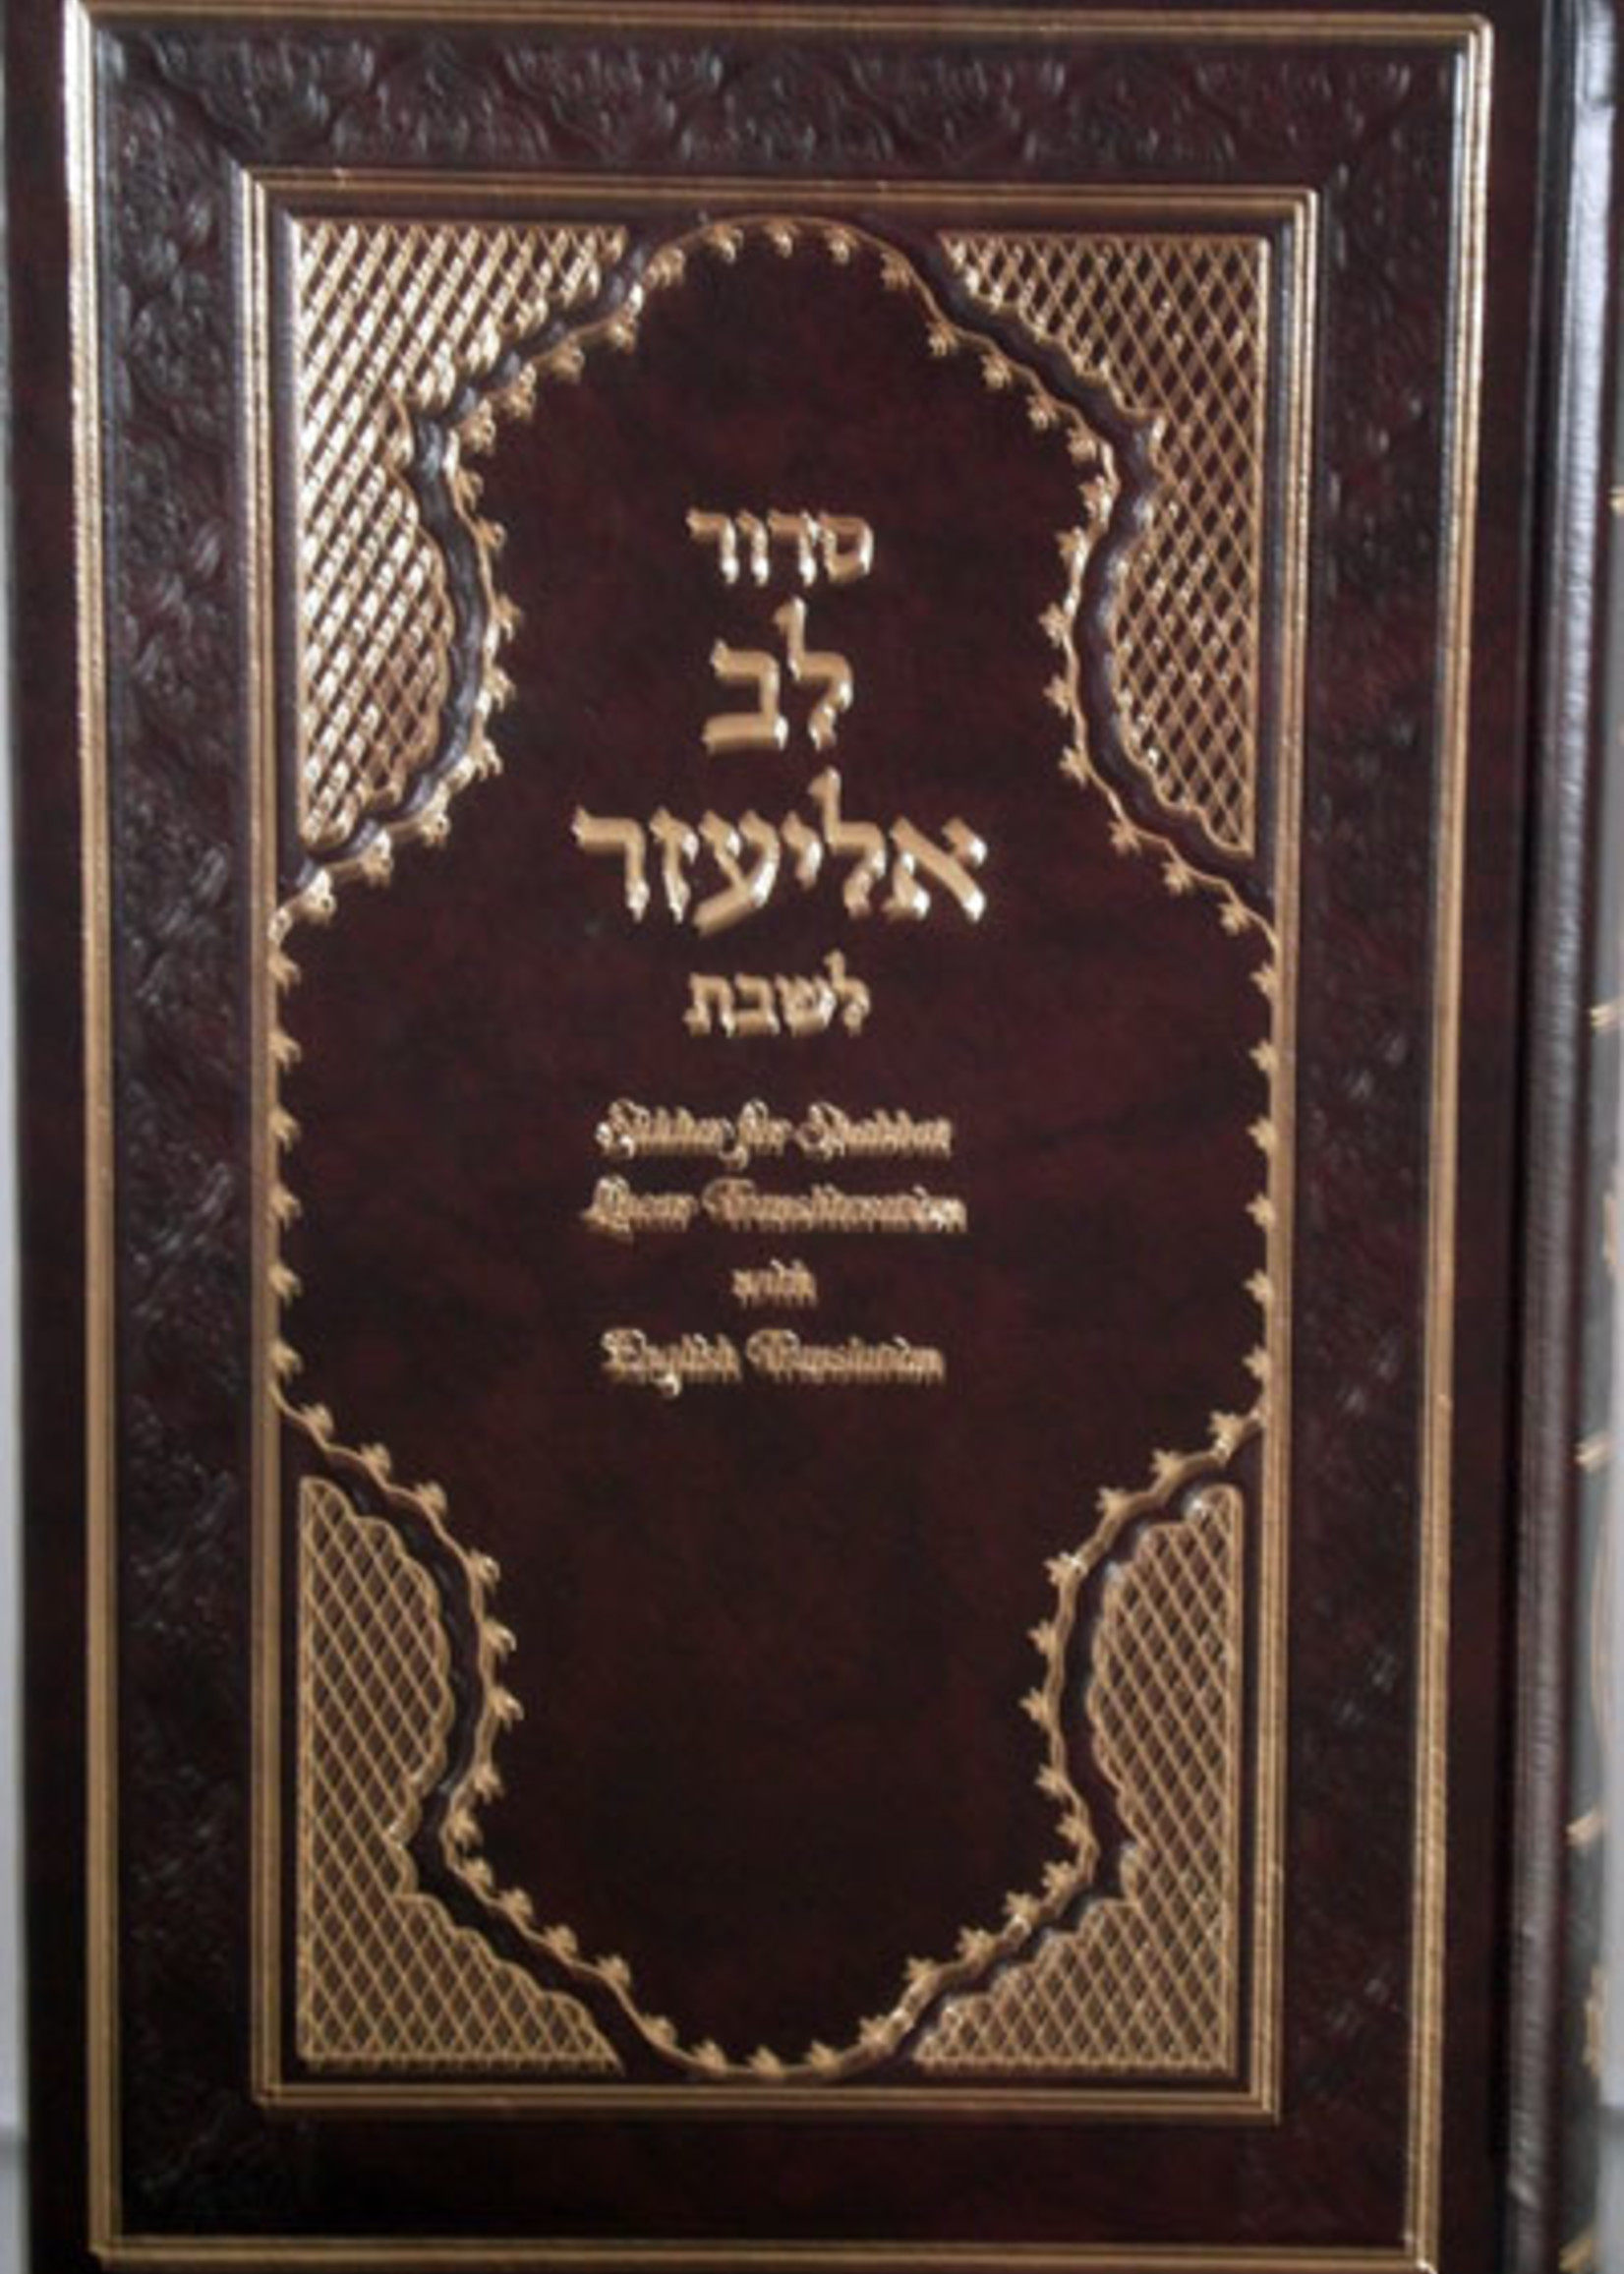 Siddur Lev Eliezer L'Shabbat with Linear Transliteration (Sephardic)